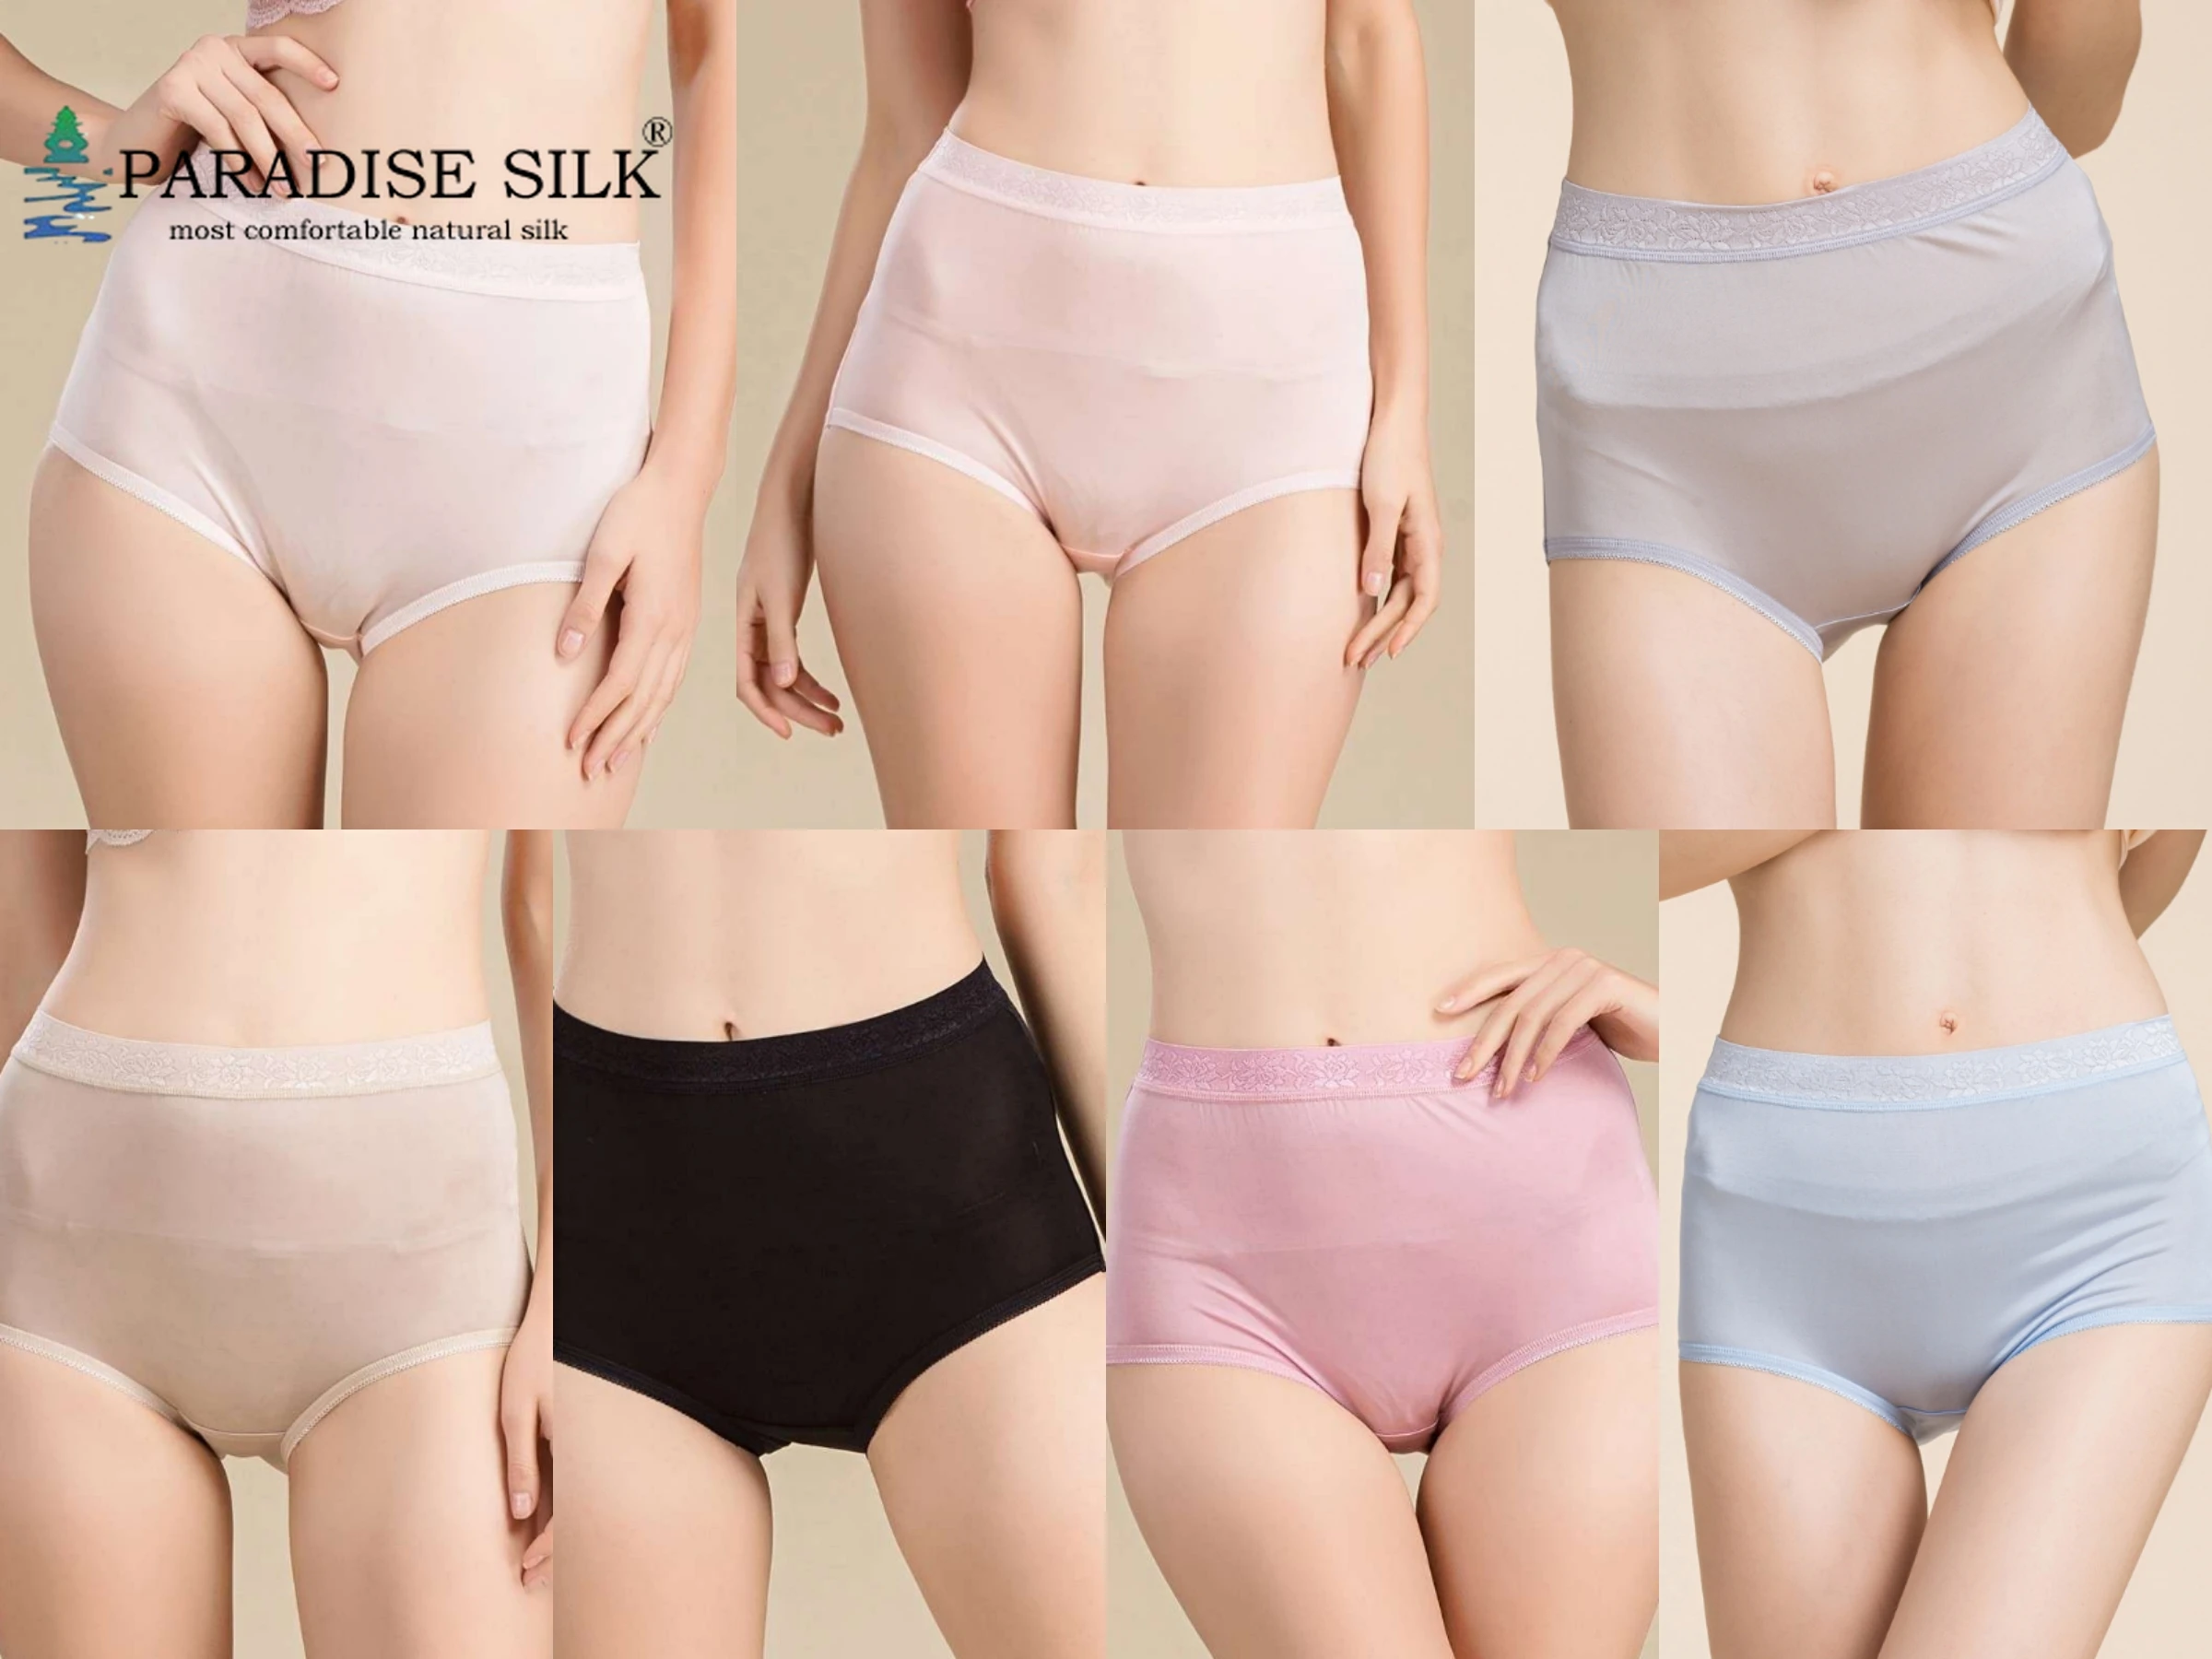 Underwear Women 3 Pair 100% Pure Silk Knit With Lace Trim Women's High Waist Panties Size M L XL XXL